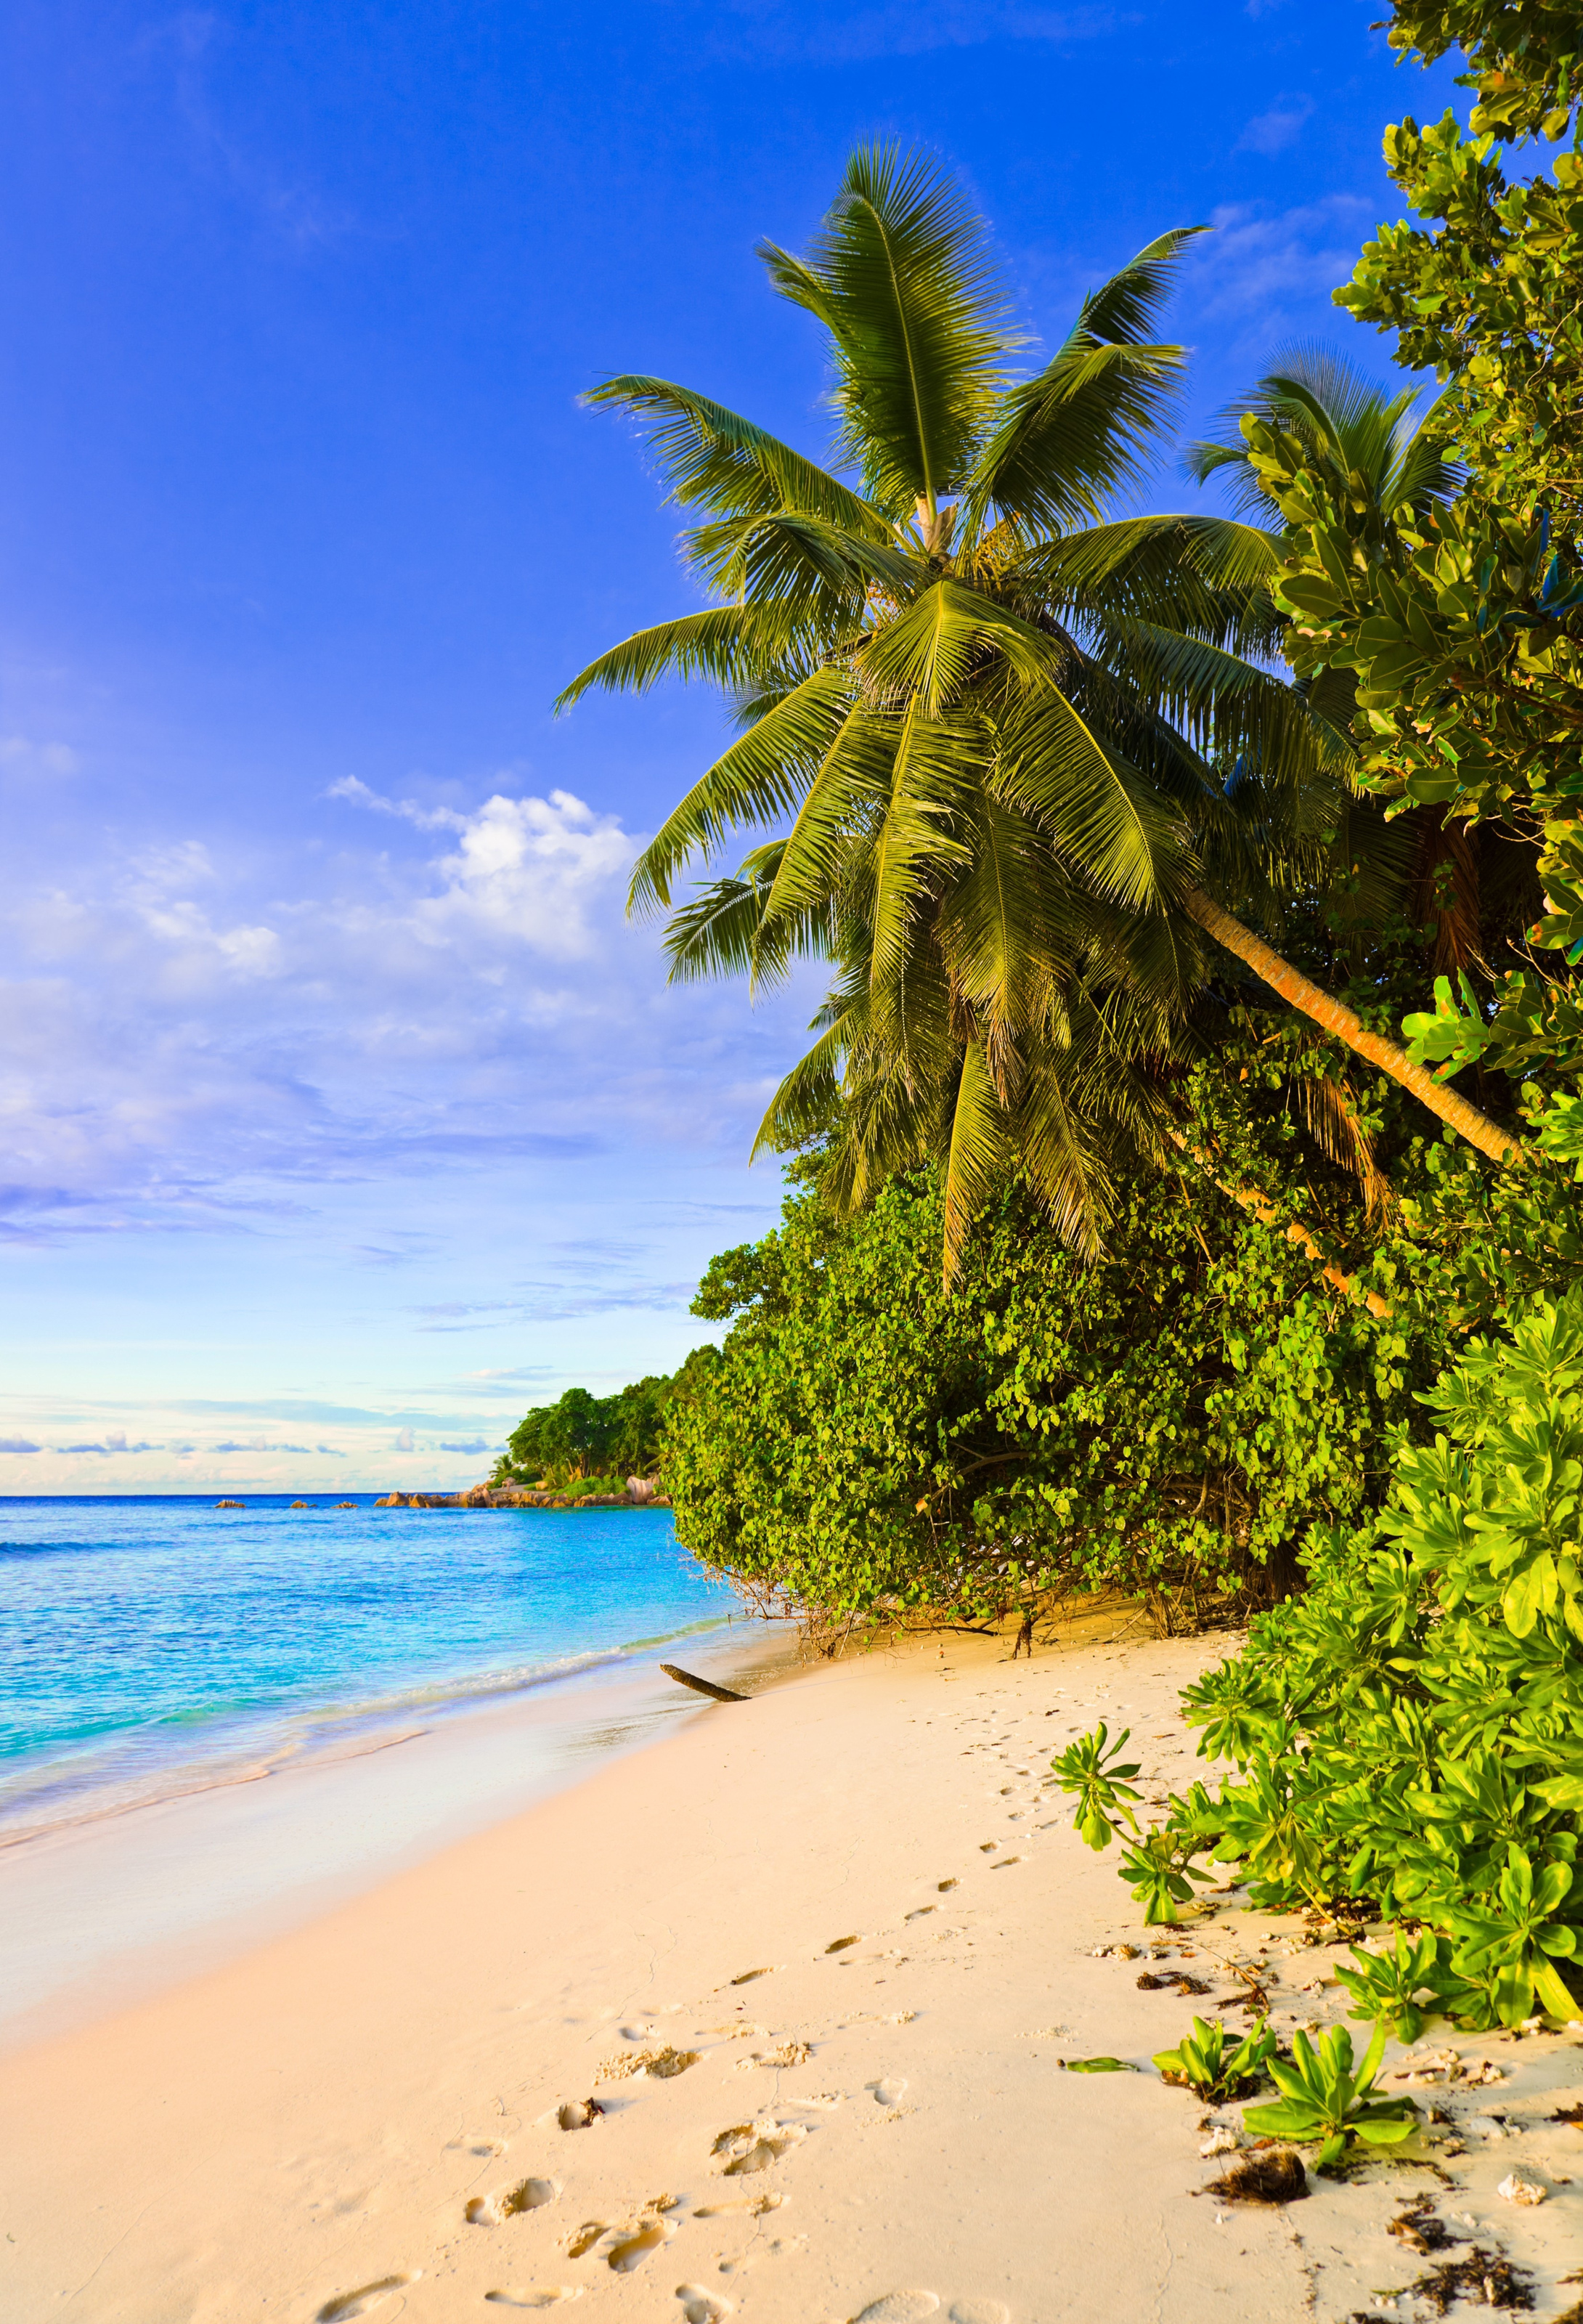 beautiful tropical beaches wallpaper